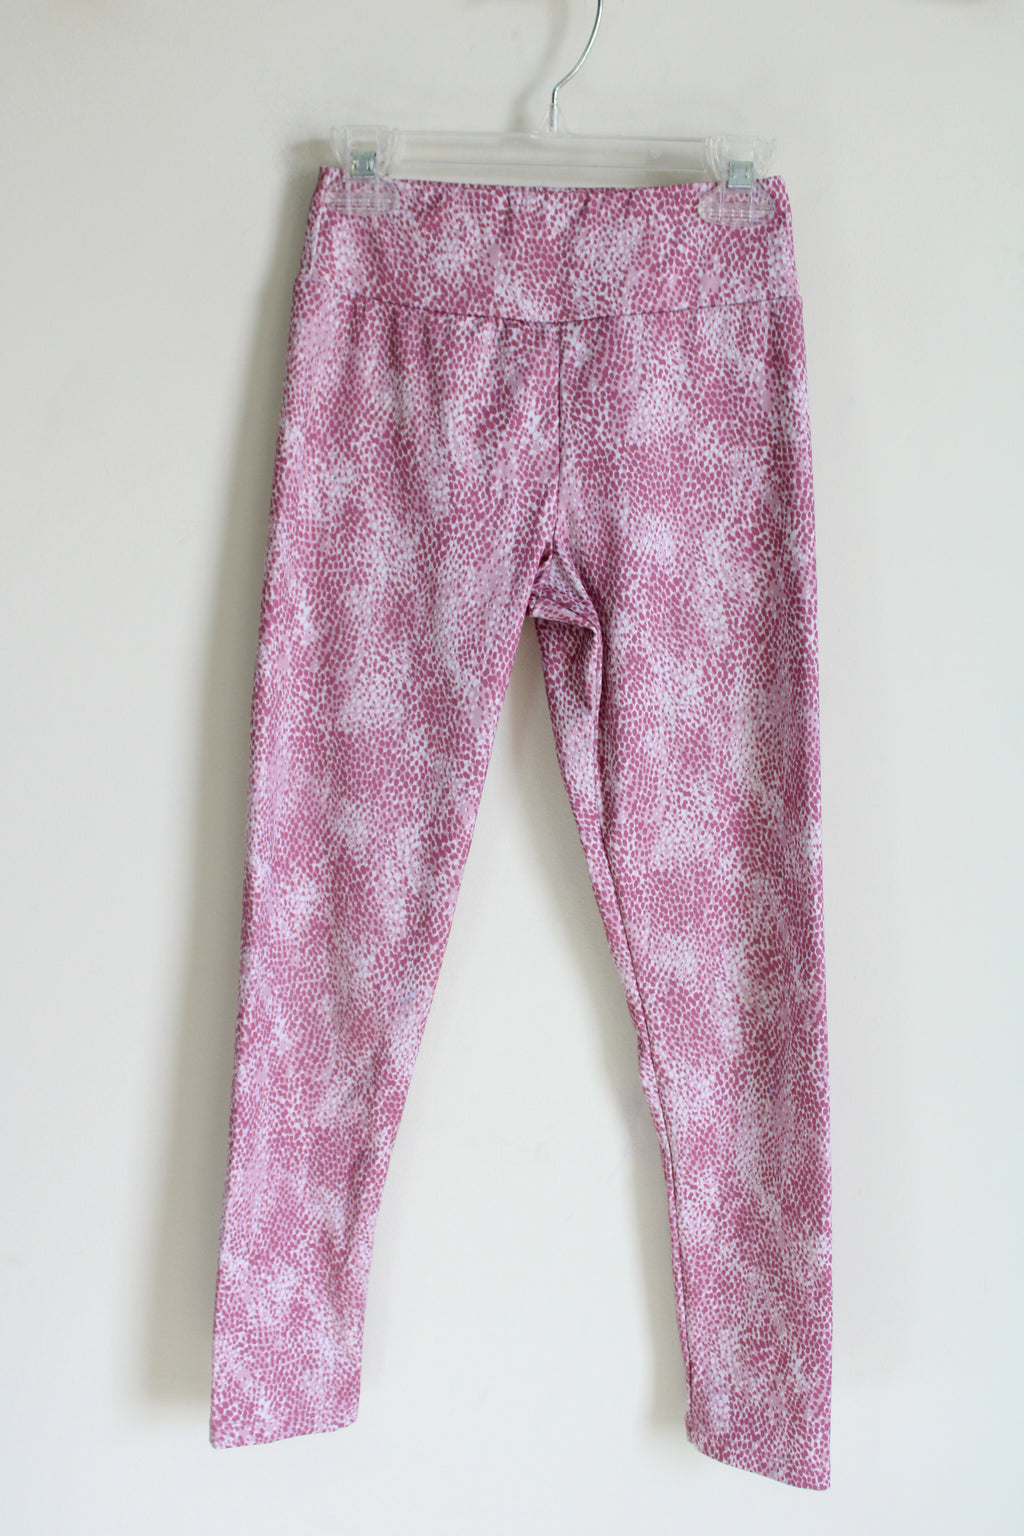 Zara Pink Speckled Leggings | 9-10